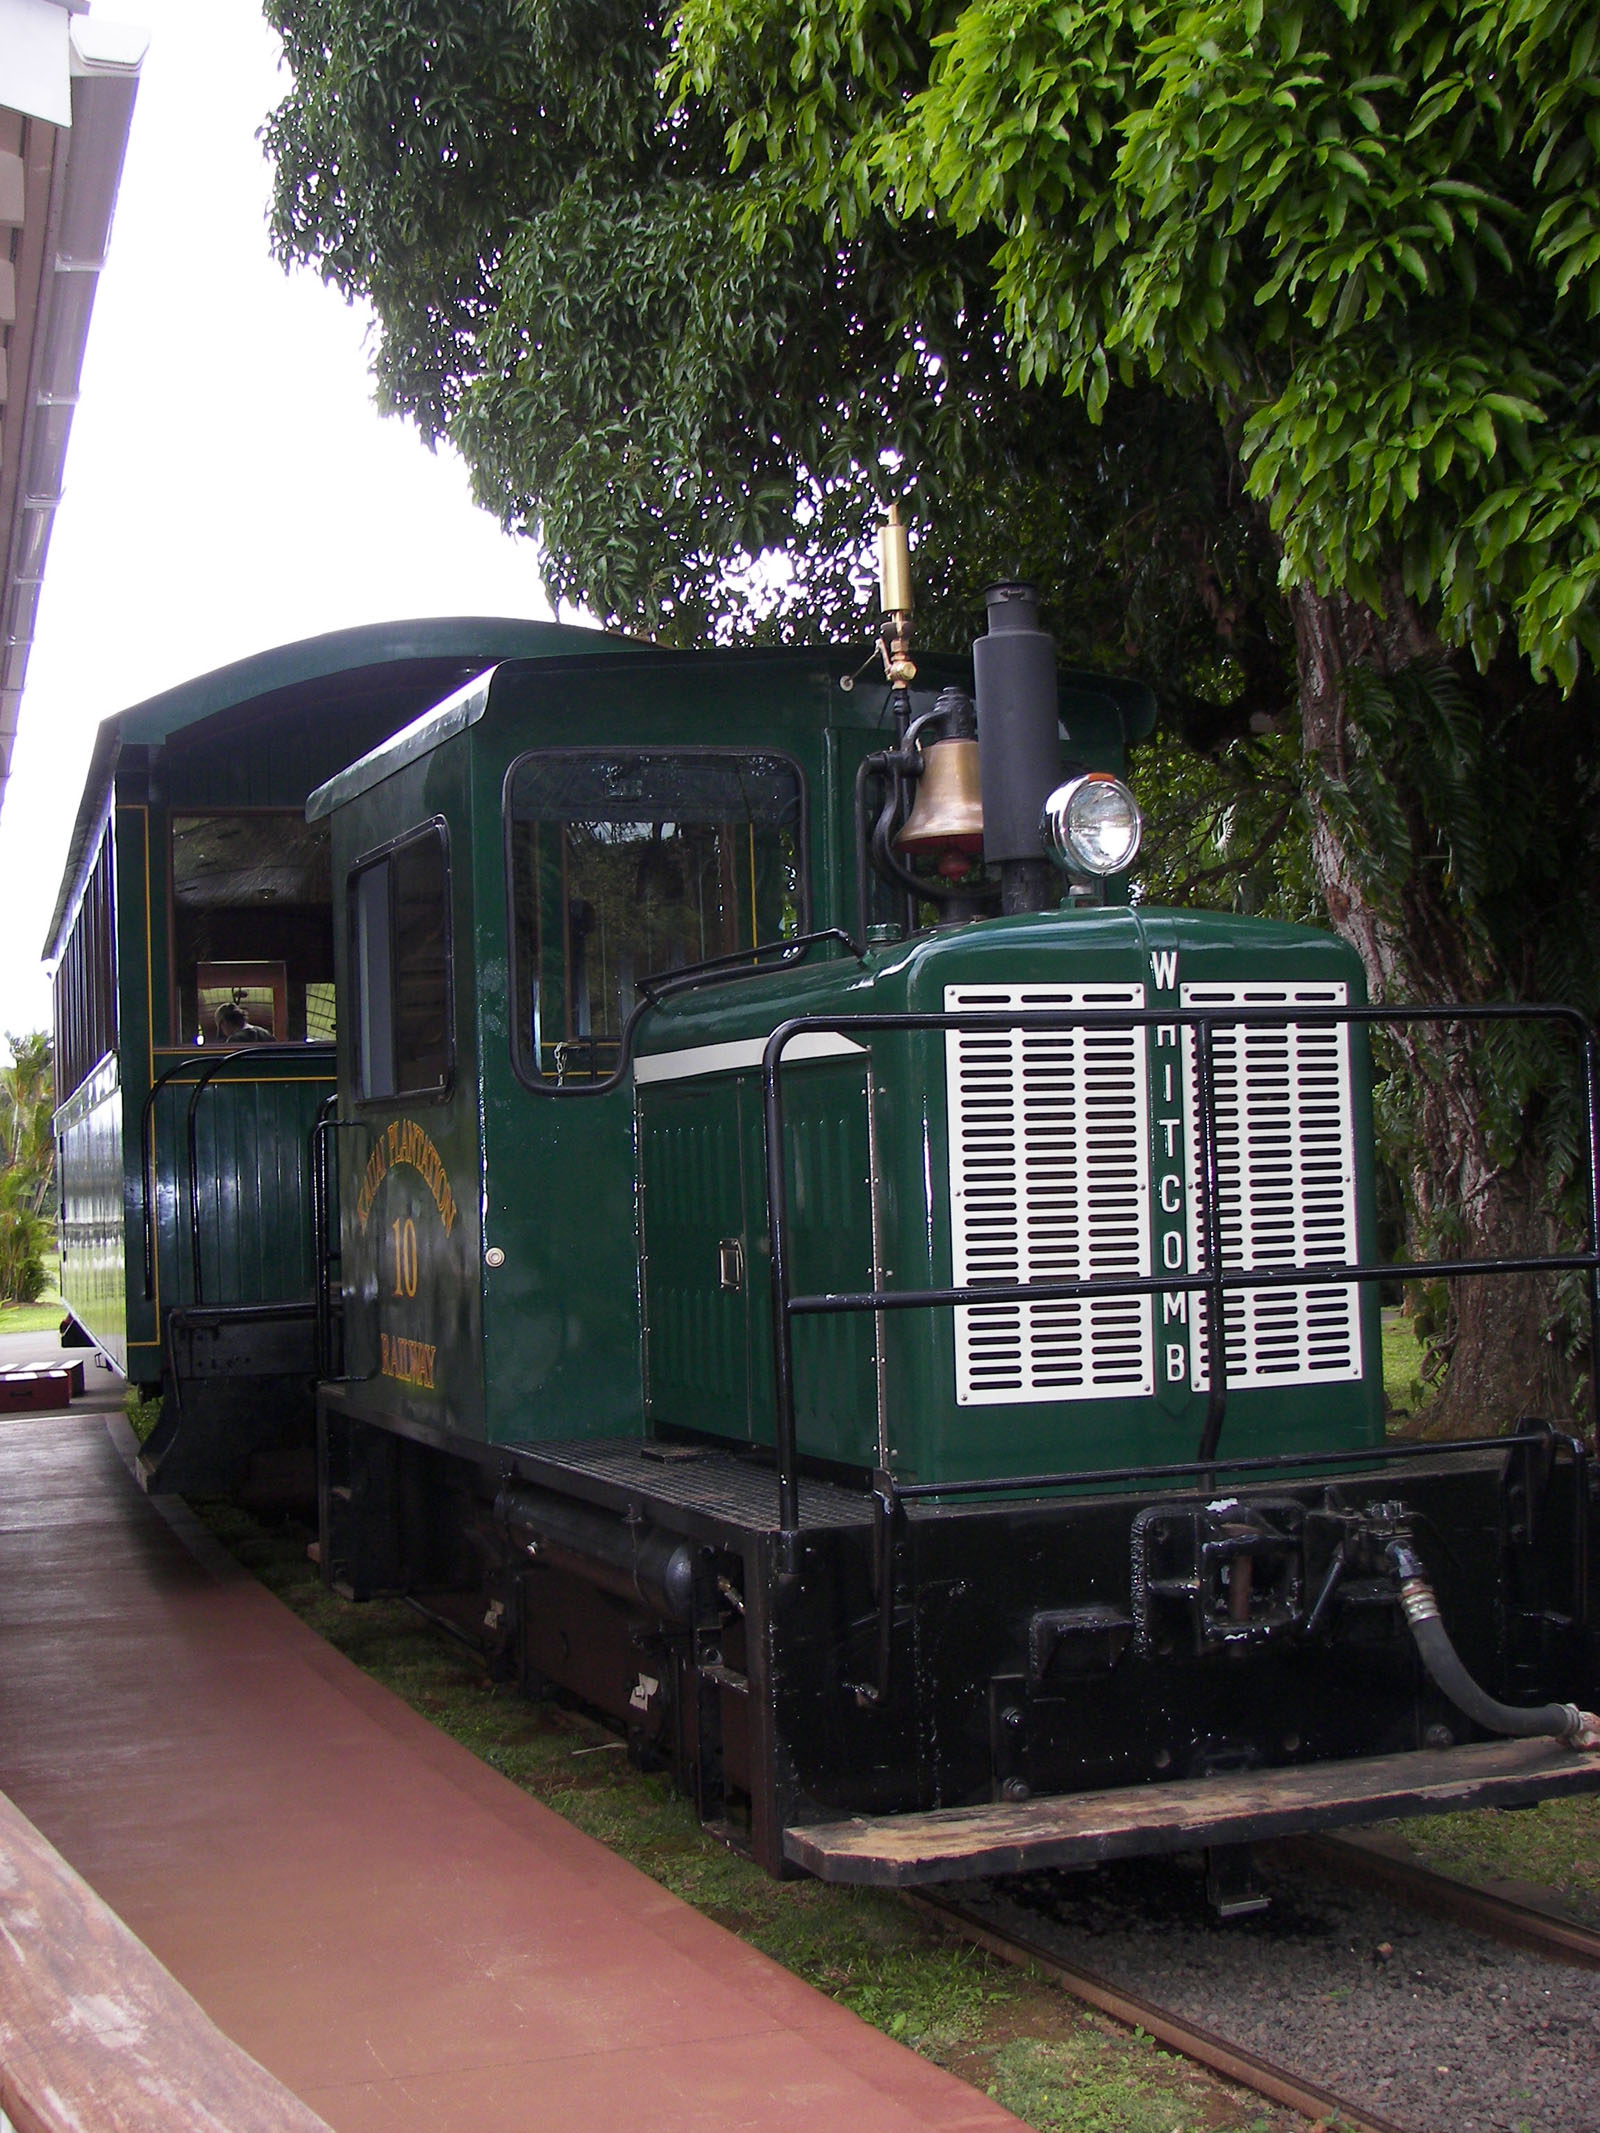 The train engine